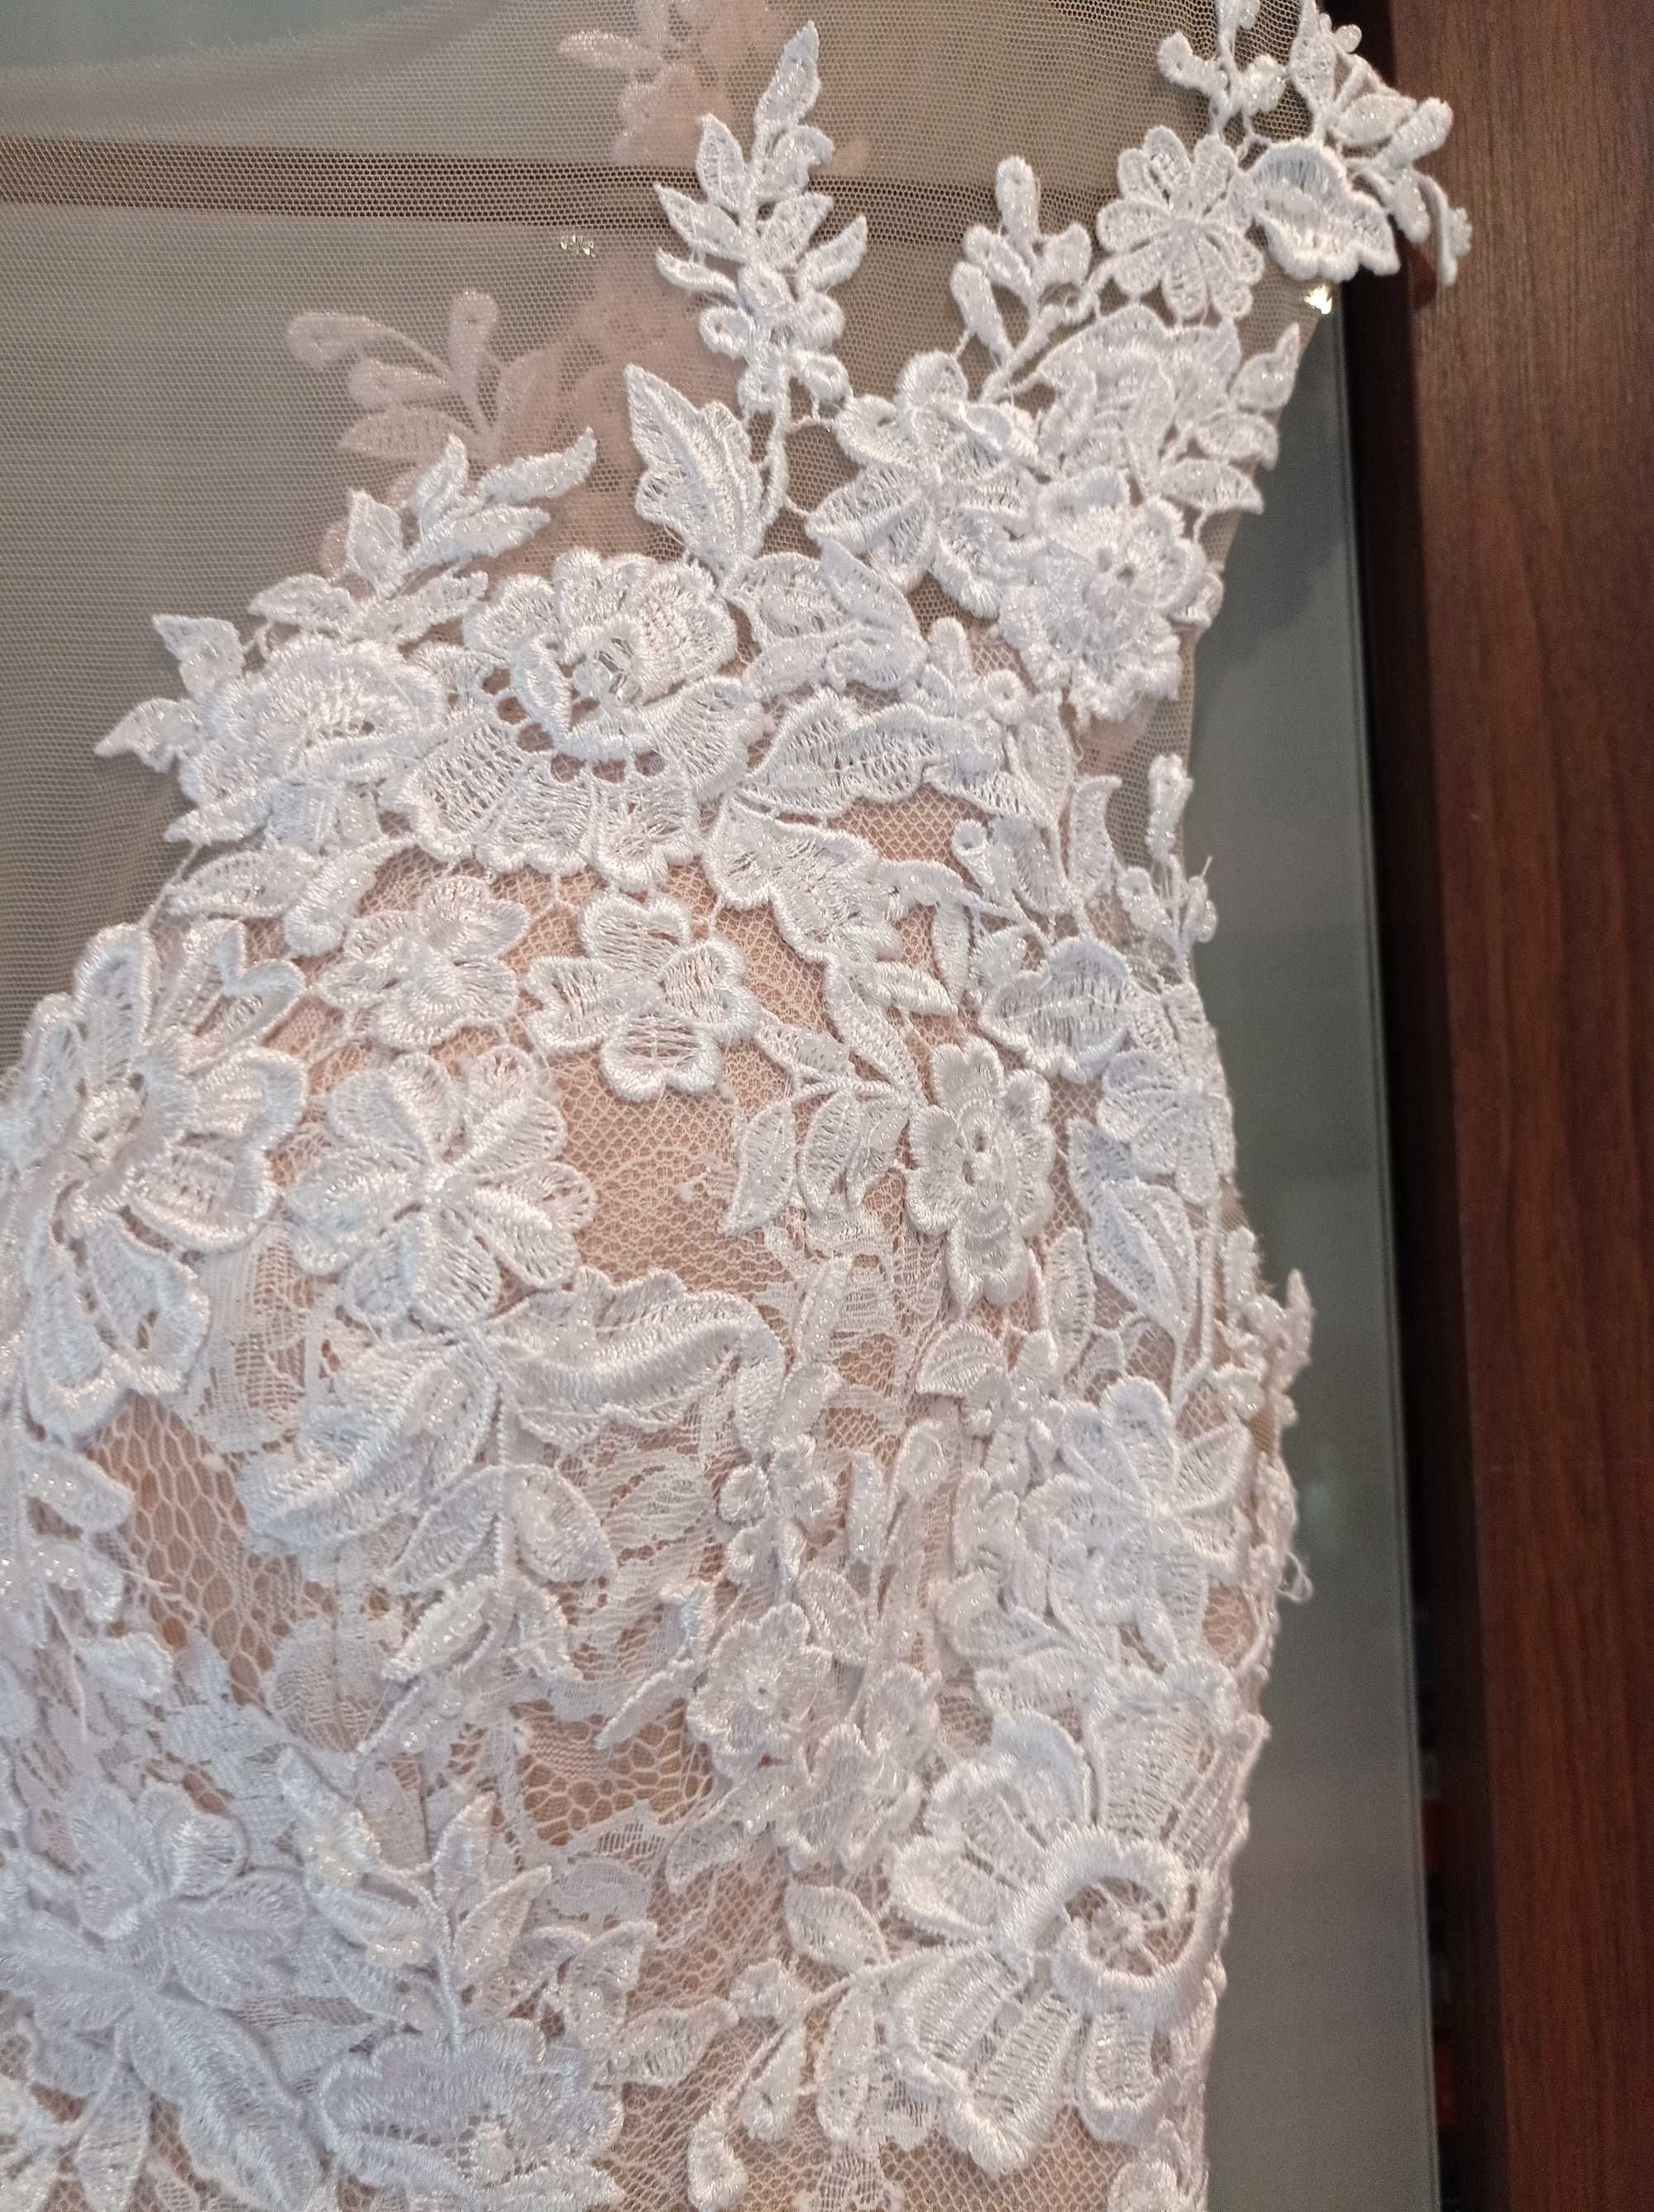 Suknia ślubna rozmiar 38/M model 2019